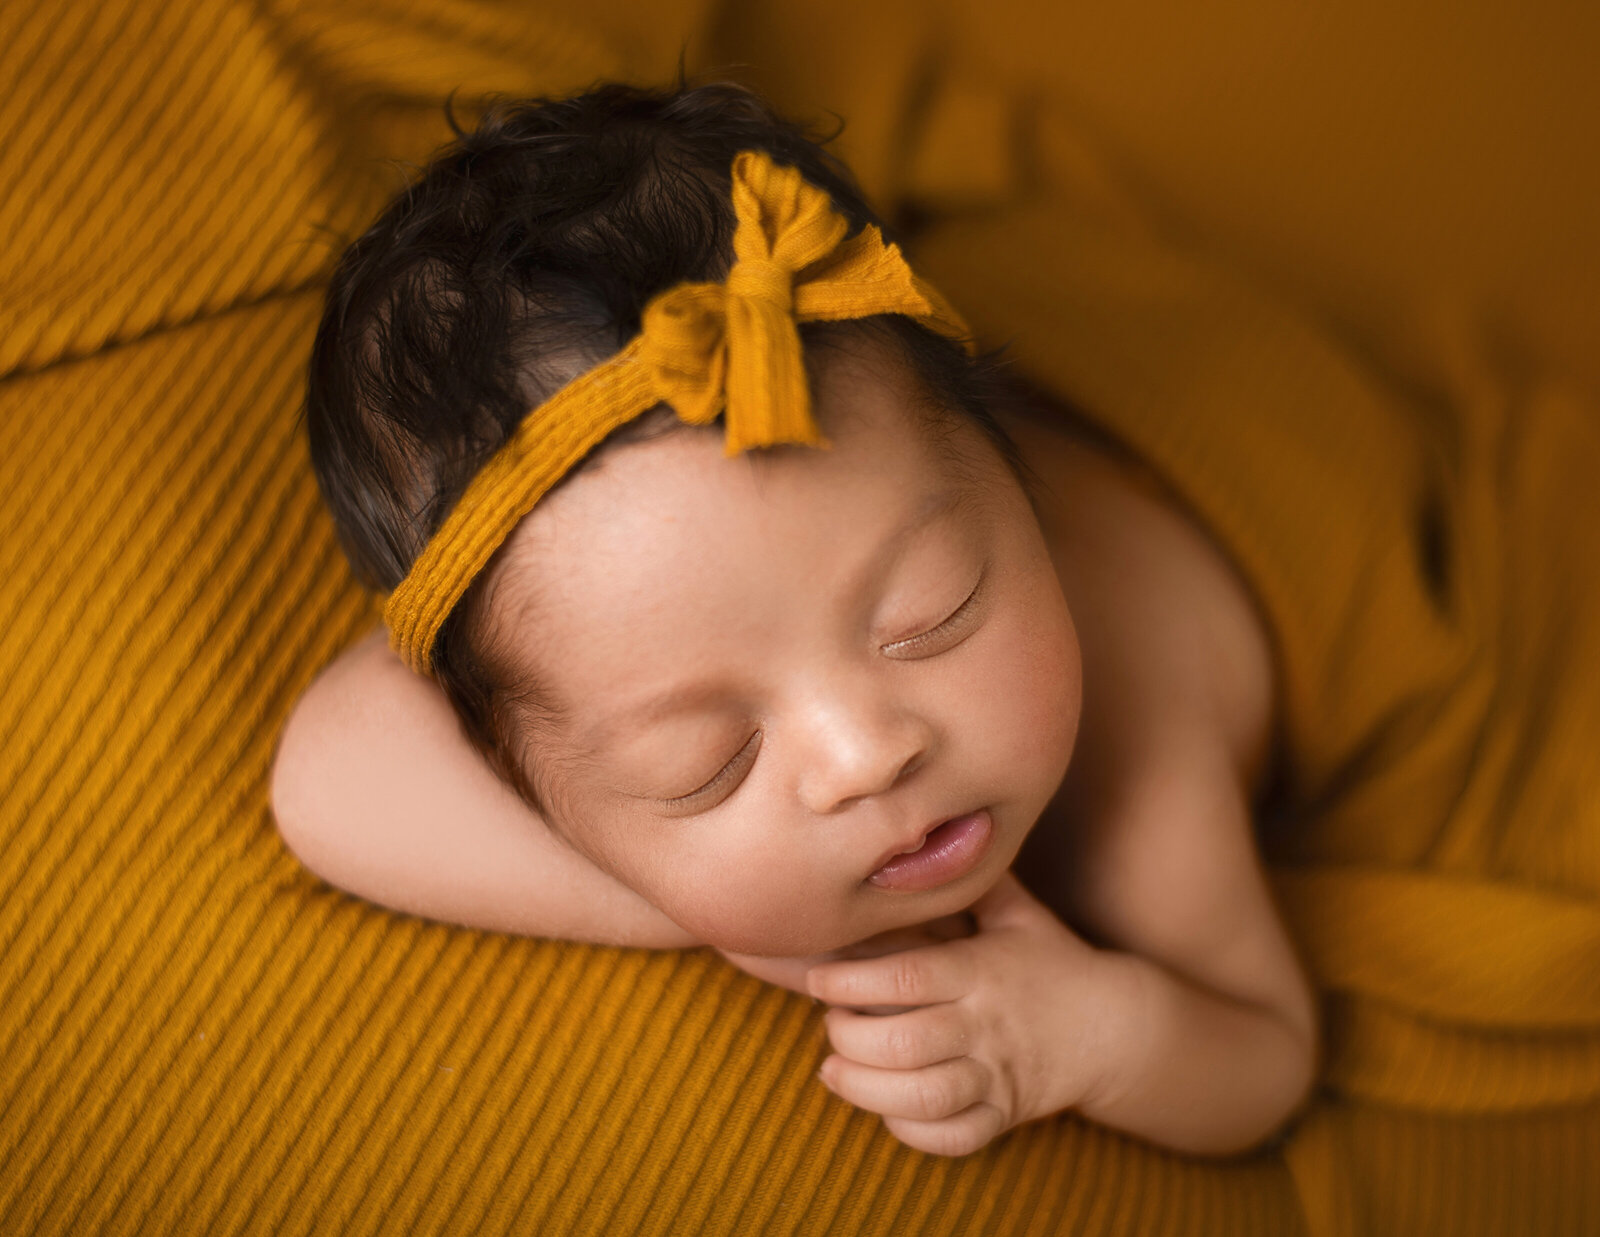 cute mustard baby photo chin on hands